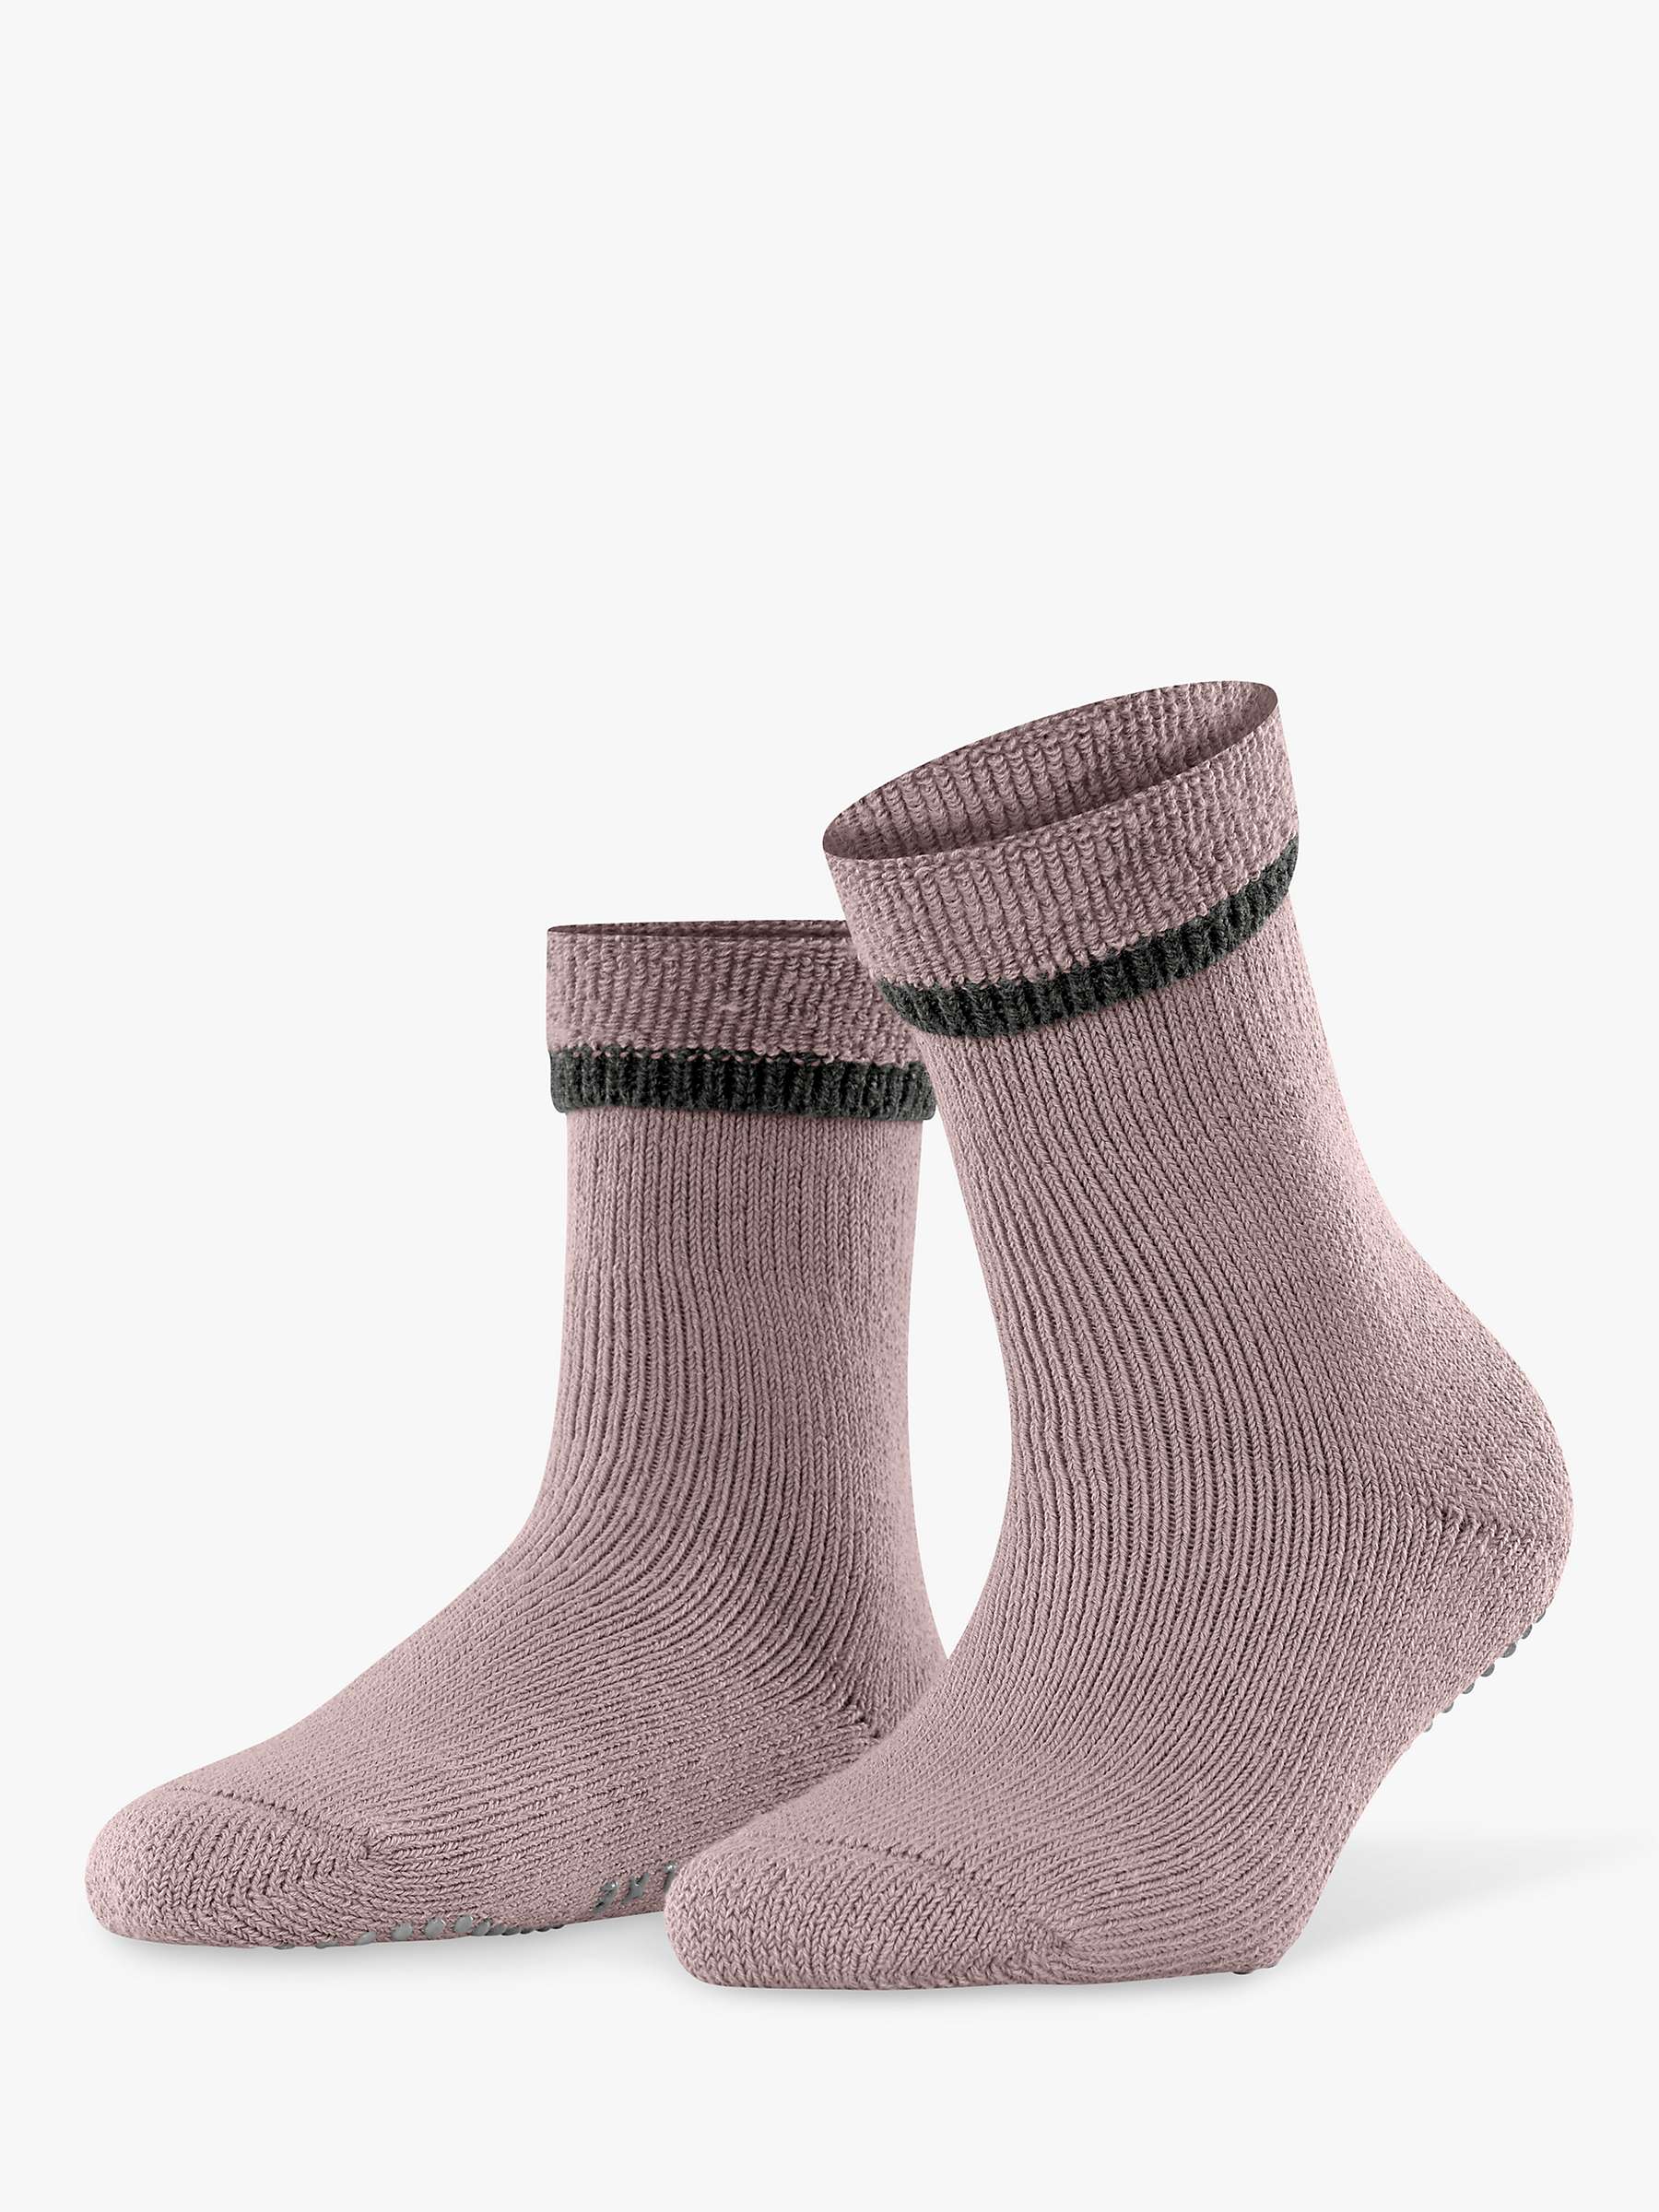 FALKE Non Slip Cuddle Pads Ankle Socks, Rosewood at John Lewis & Partners